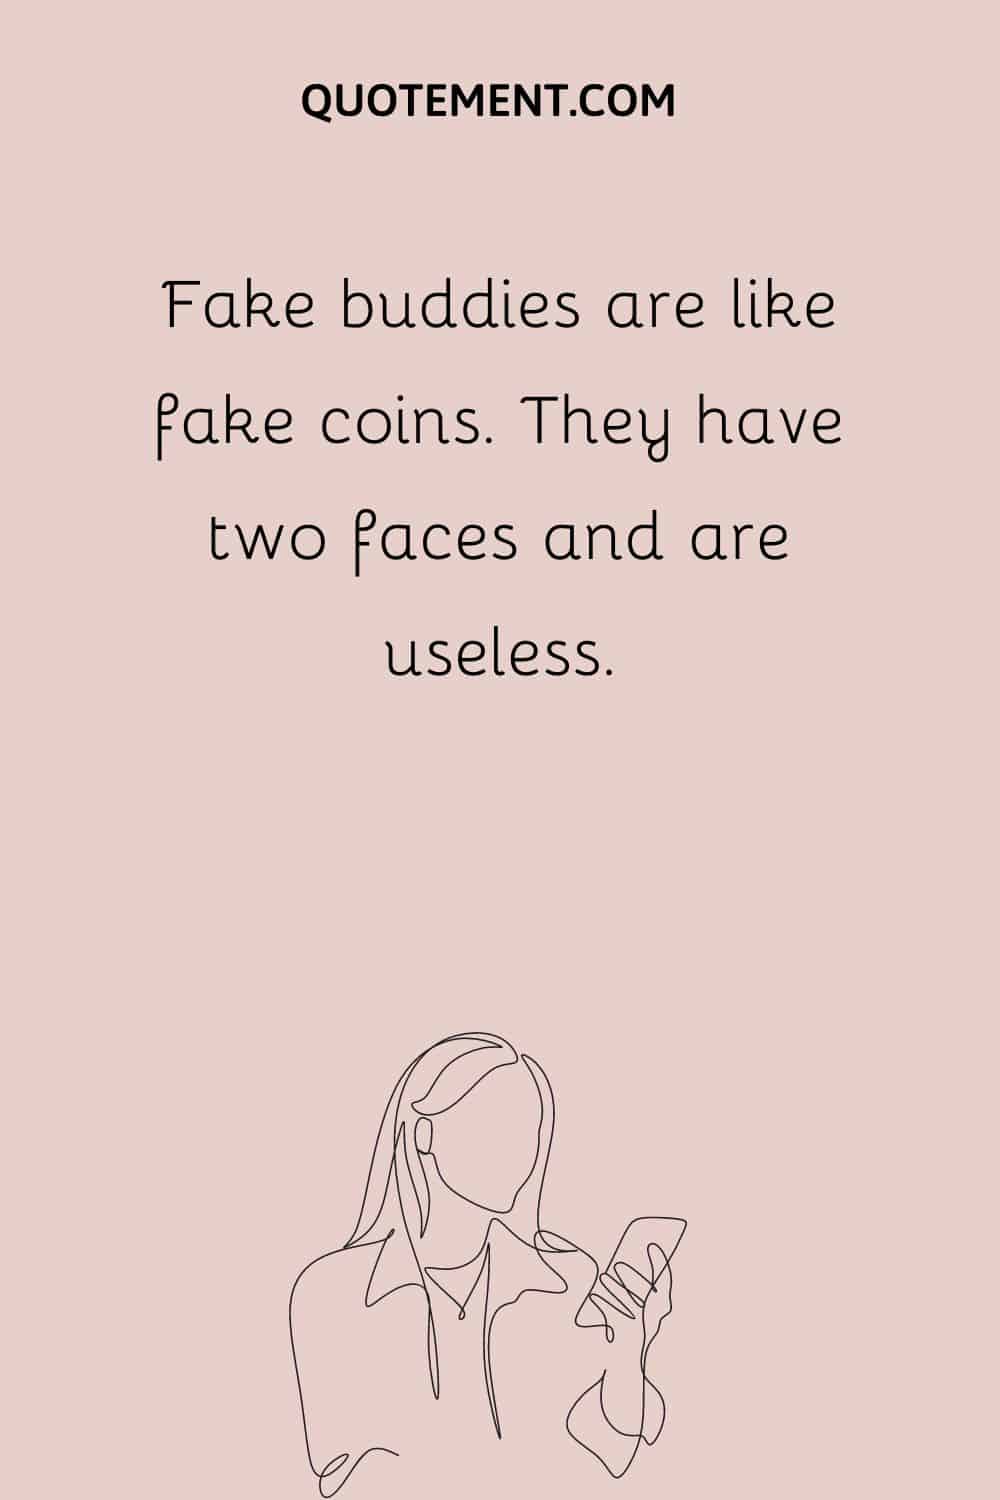 Fake buddies are like fake coins.